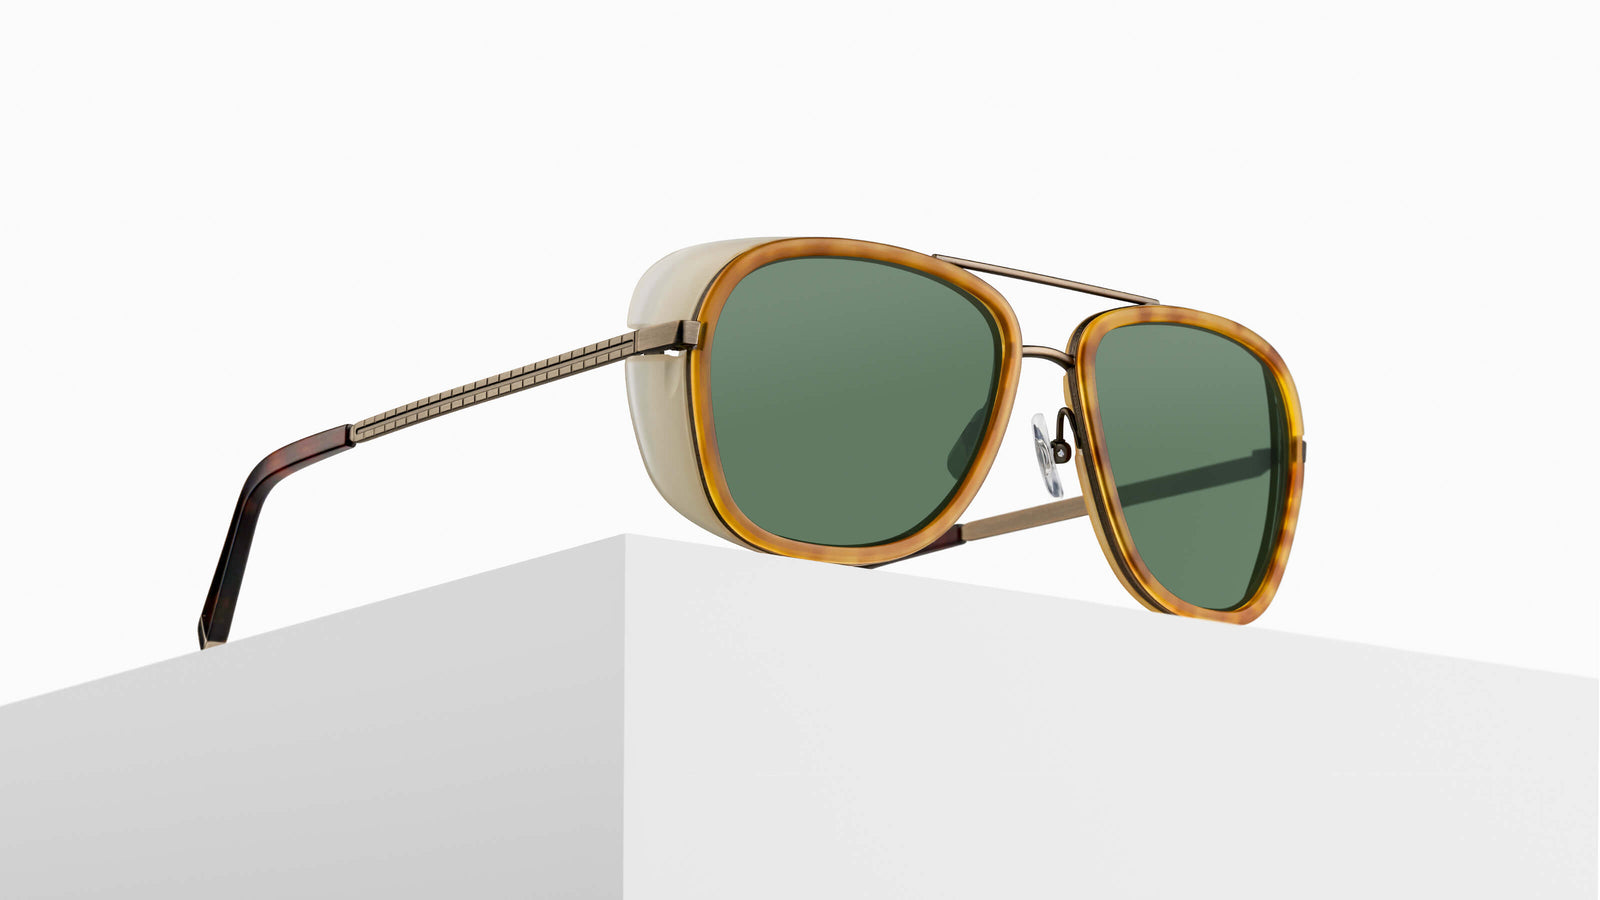 Details 159+ matsuda sunglasses best